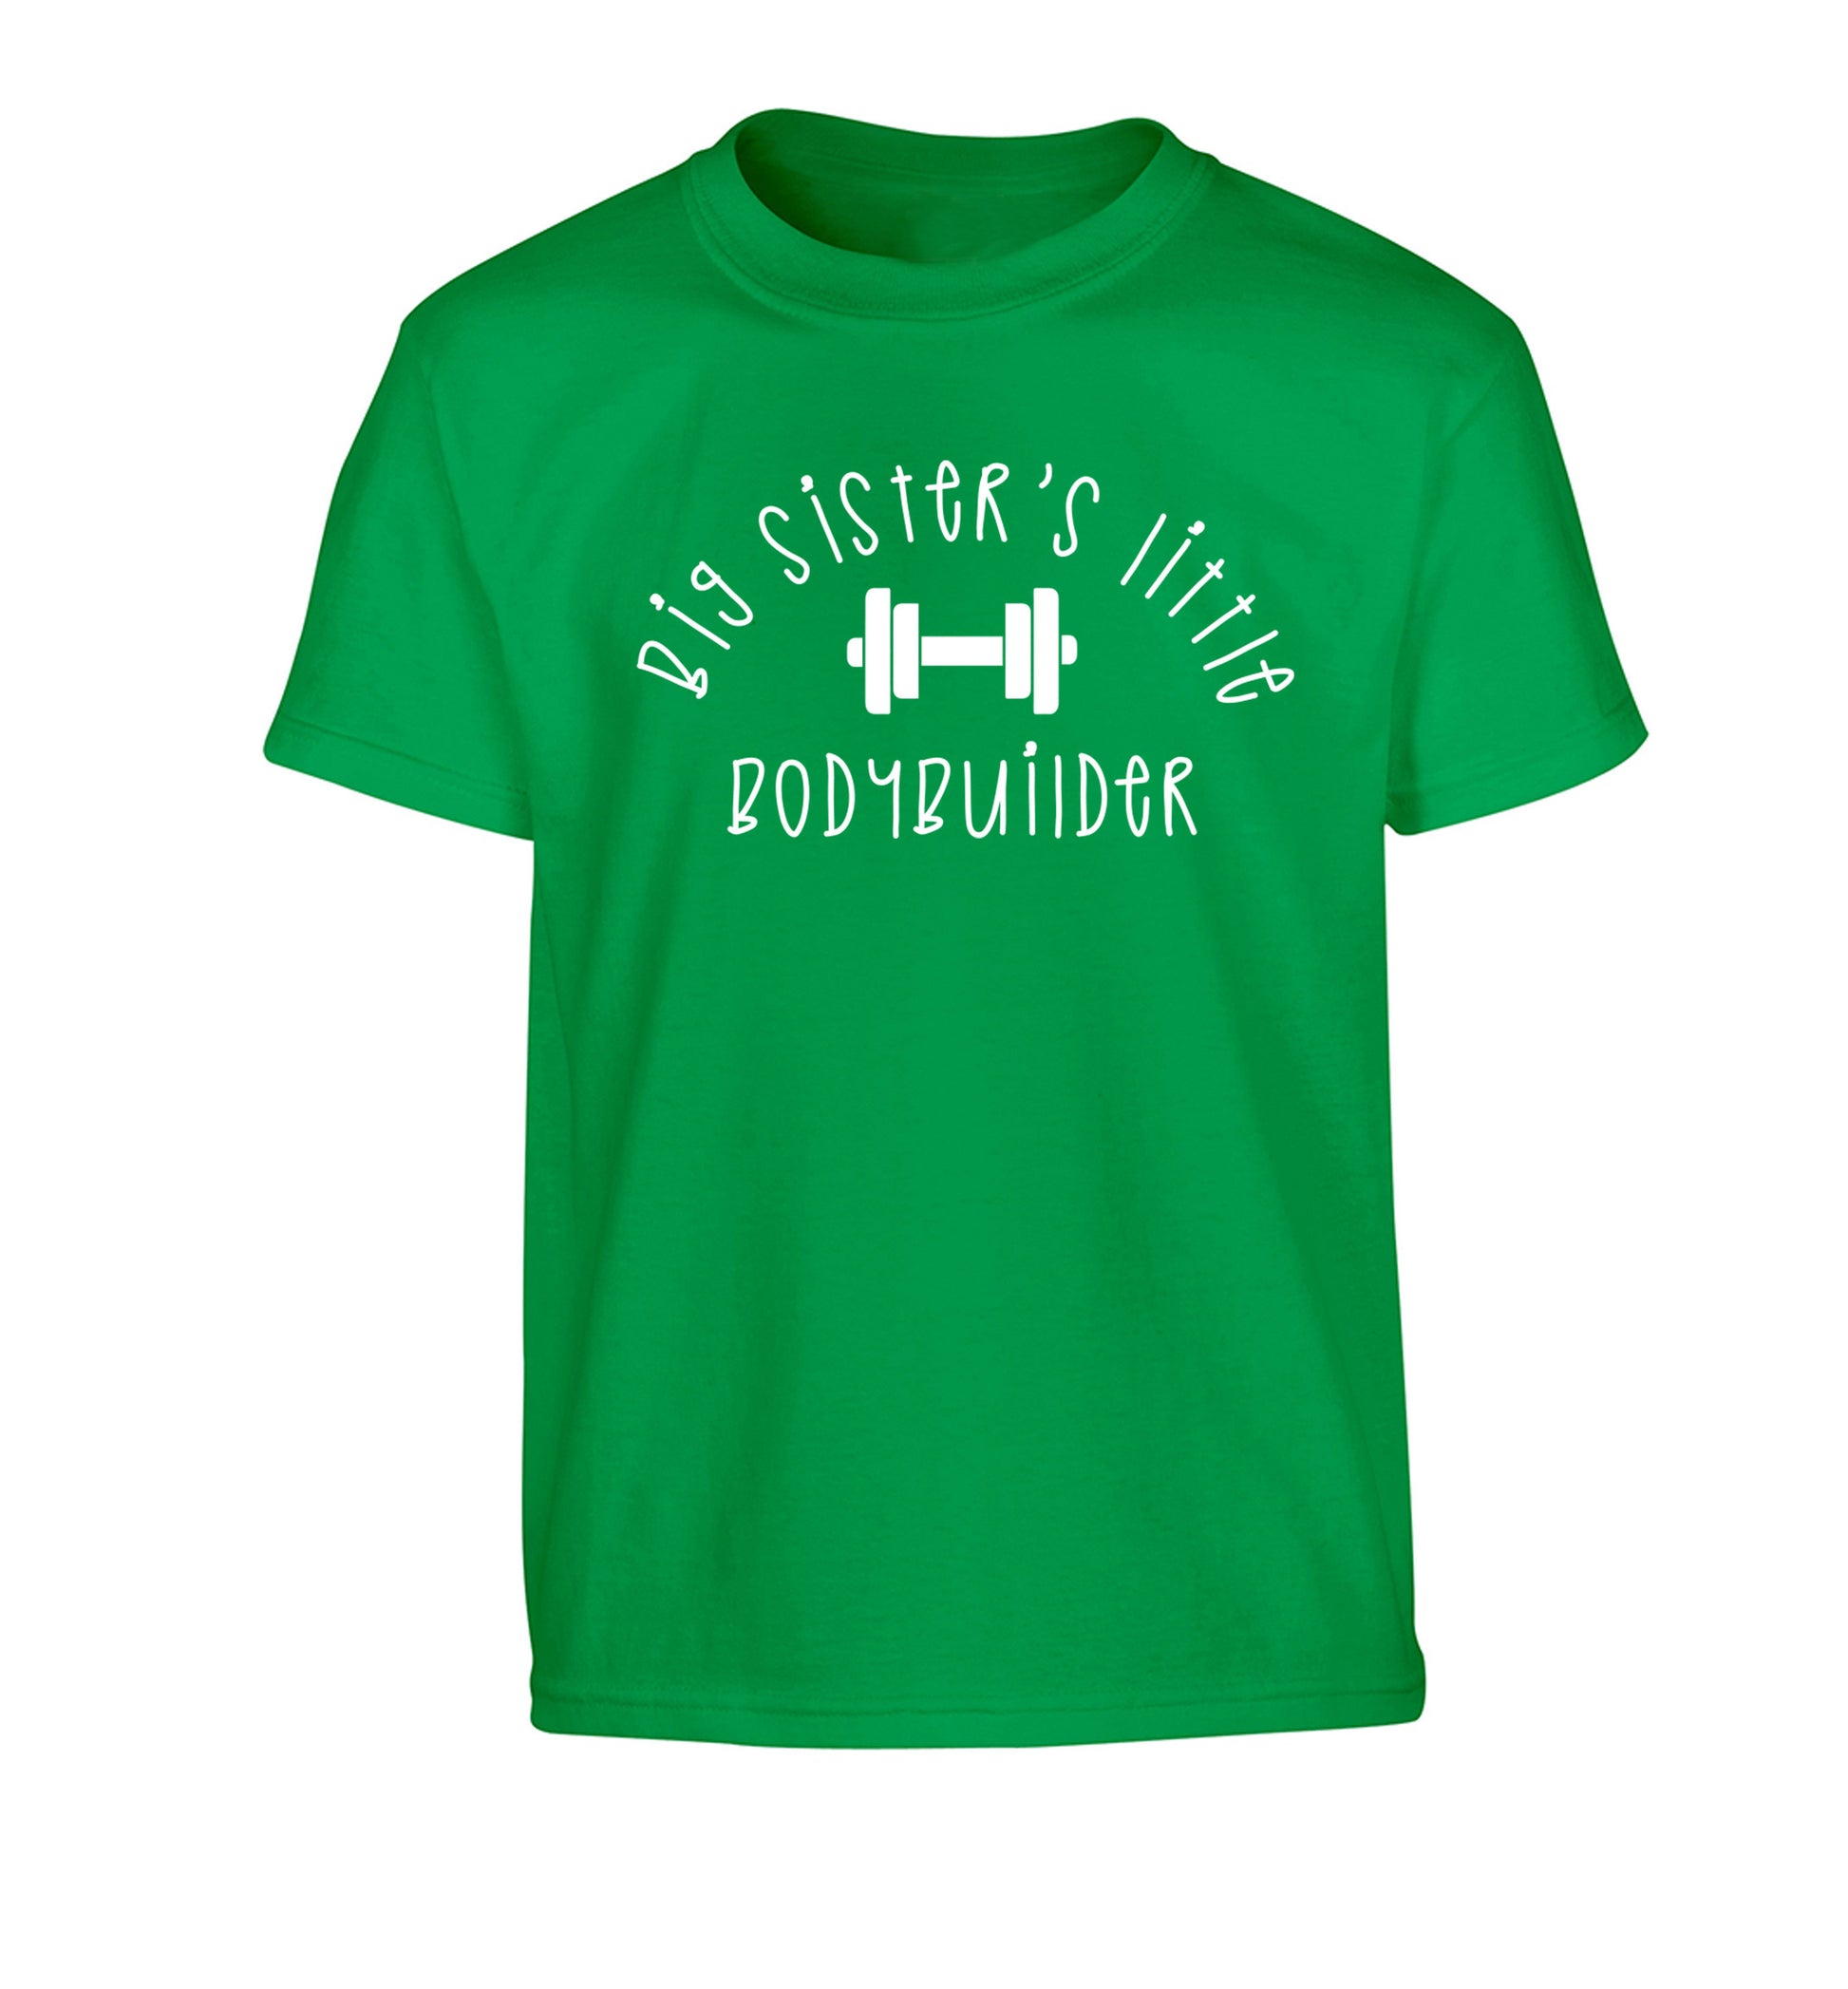 Big sister's little bodybuilder Children's green Tshirt 12-14 Years